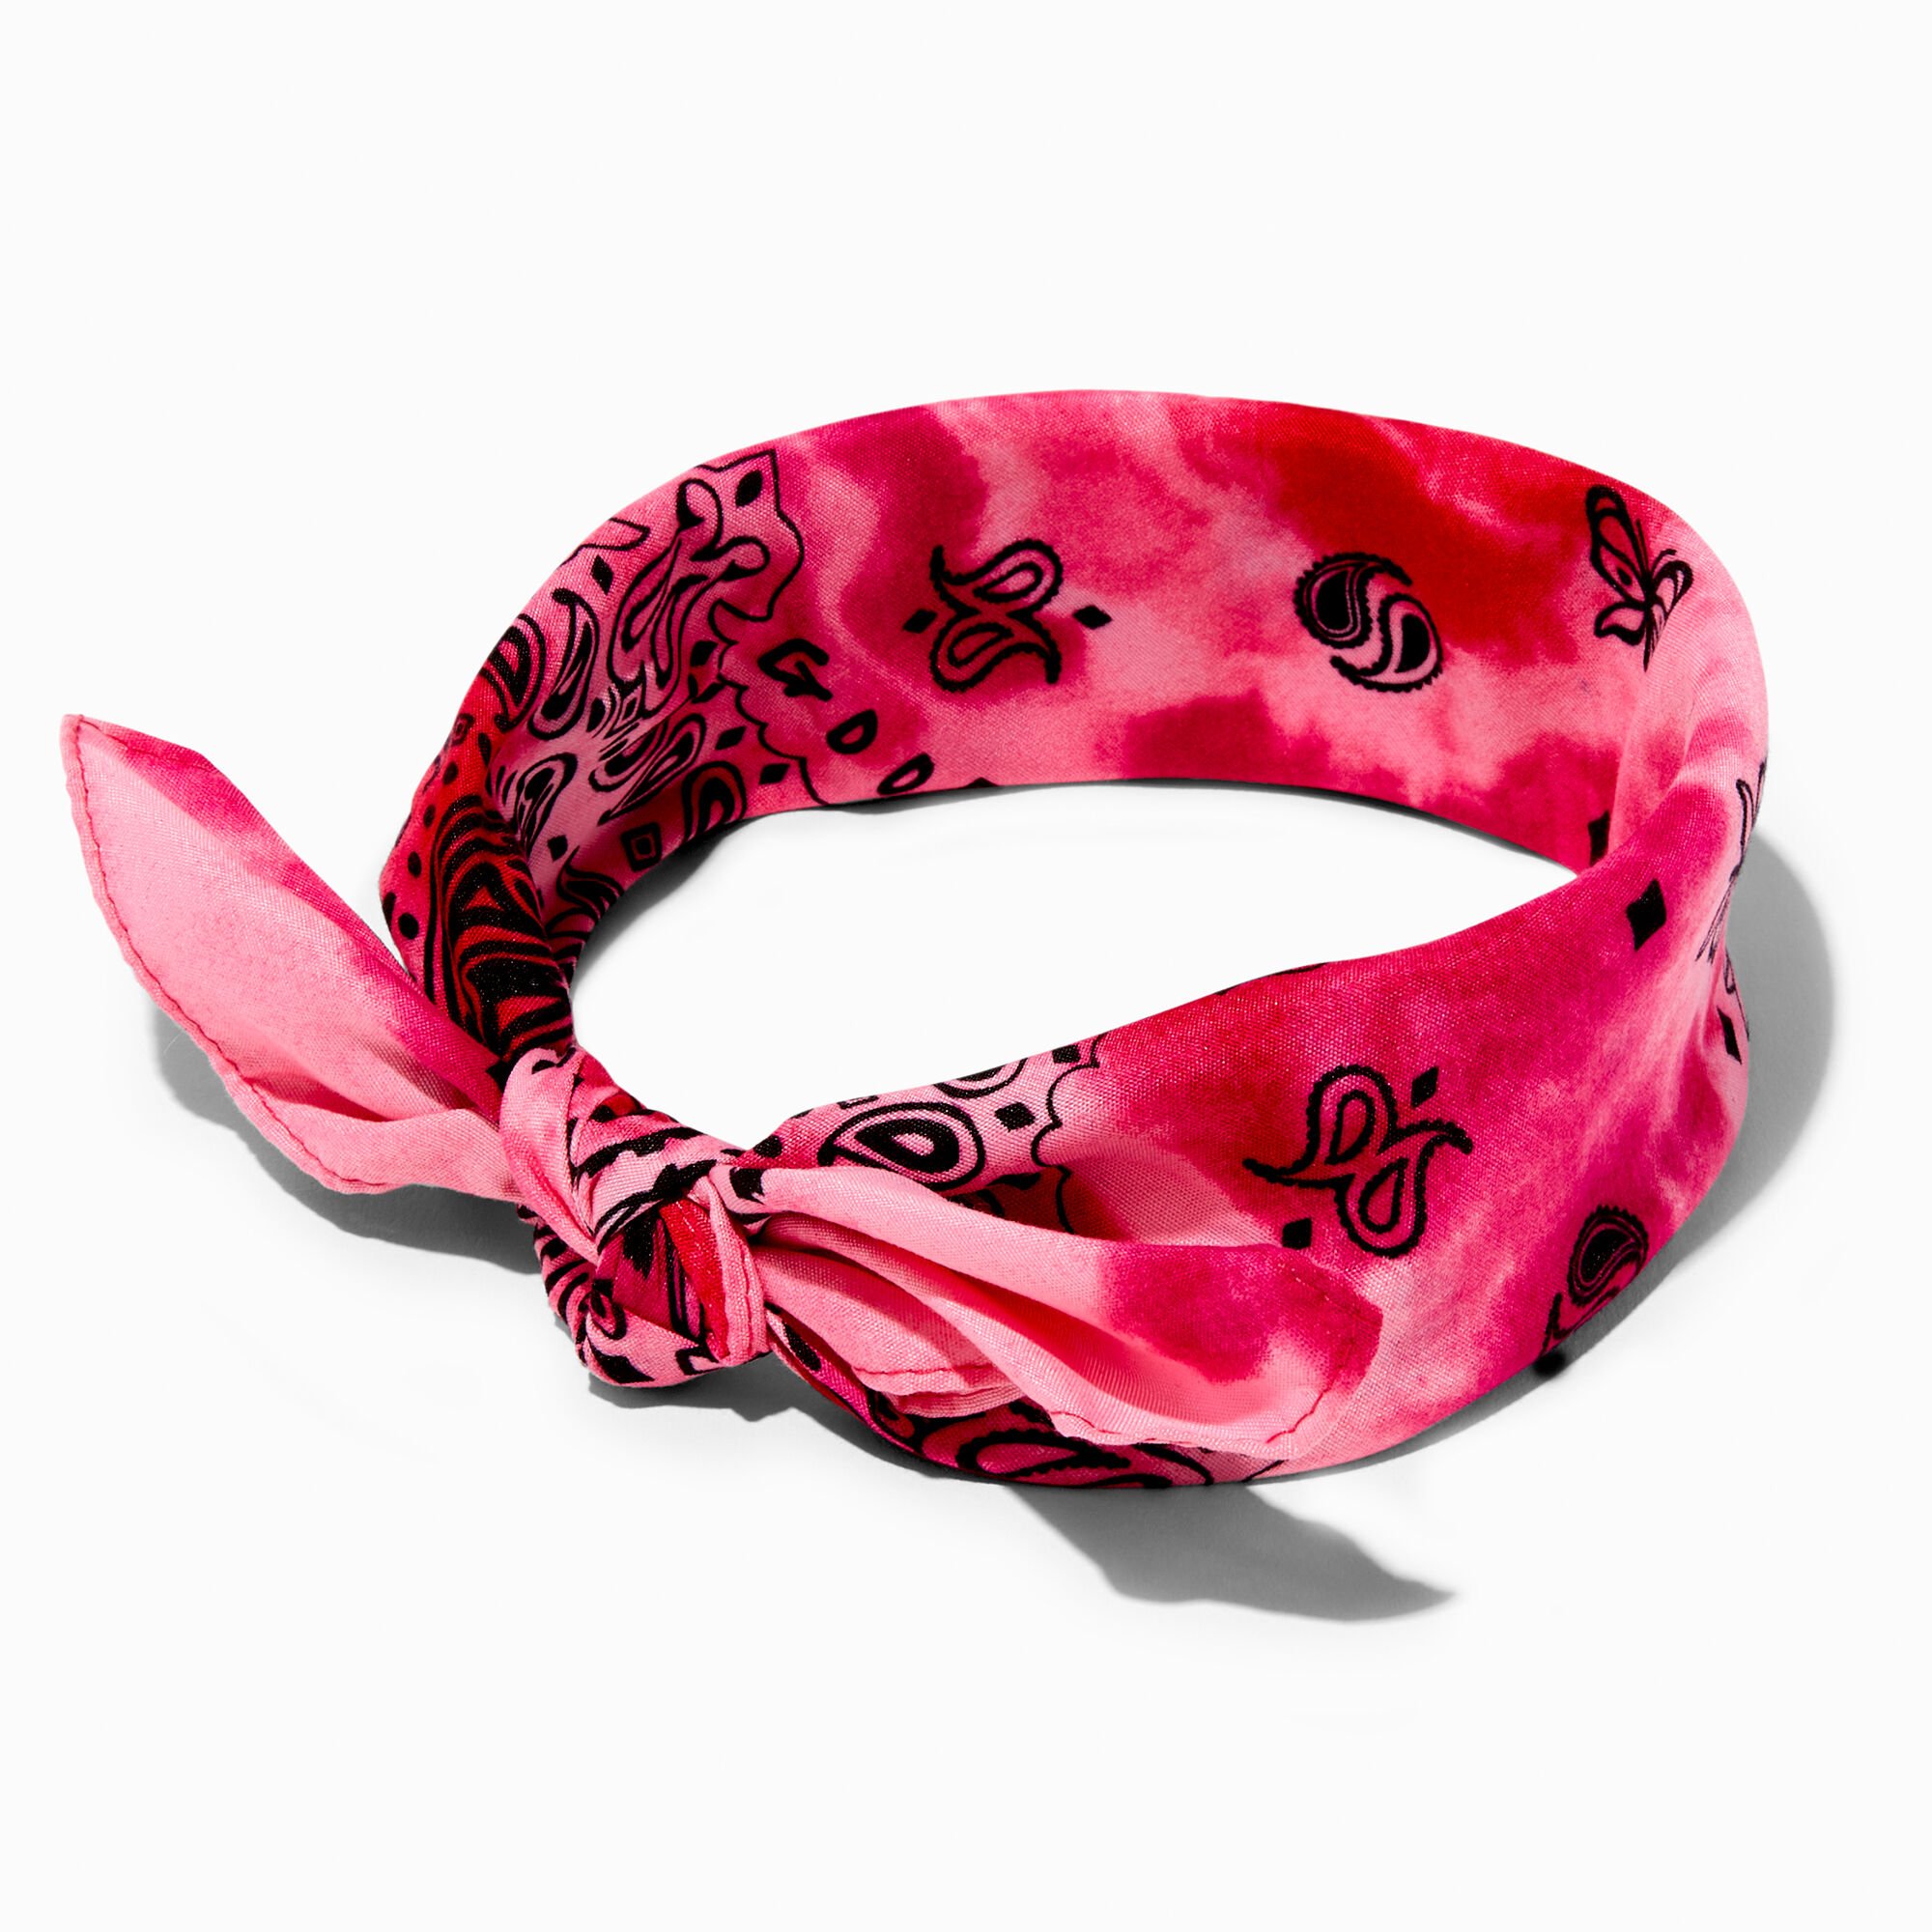 View Claires Tie Dye Bandana Headwrap Pink information